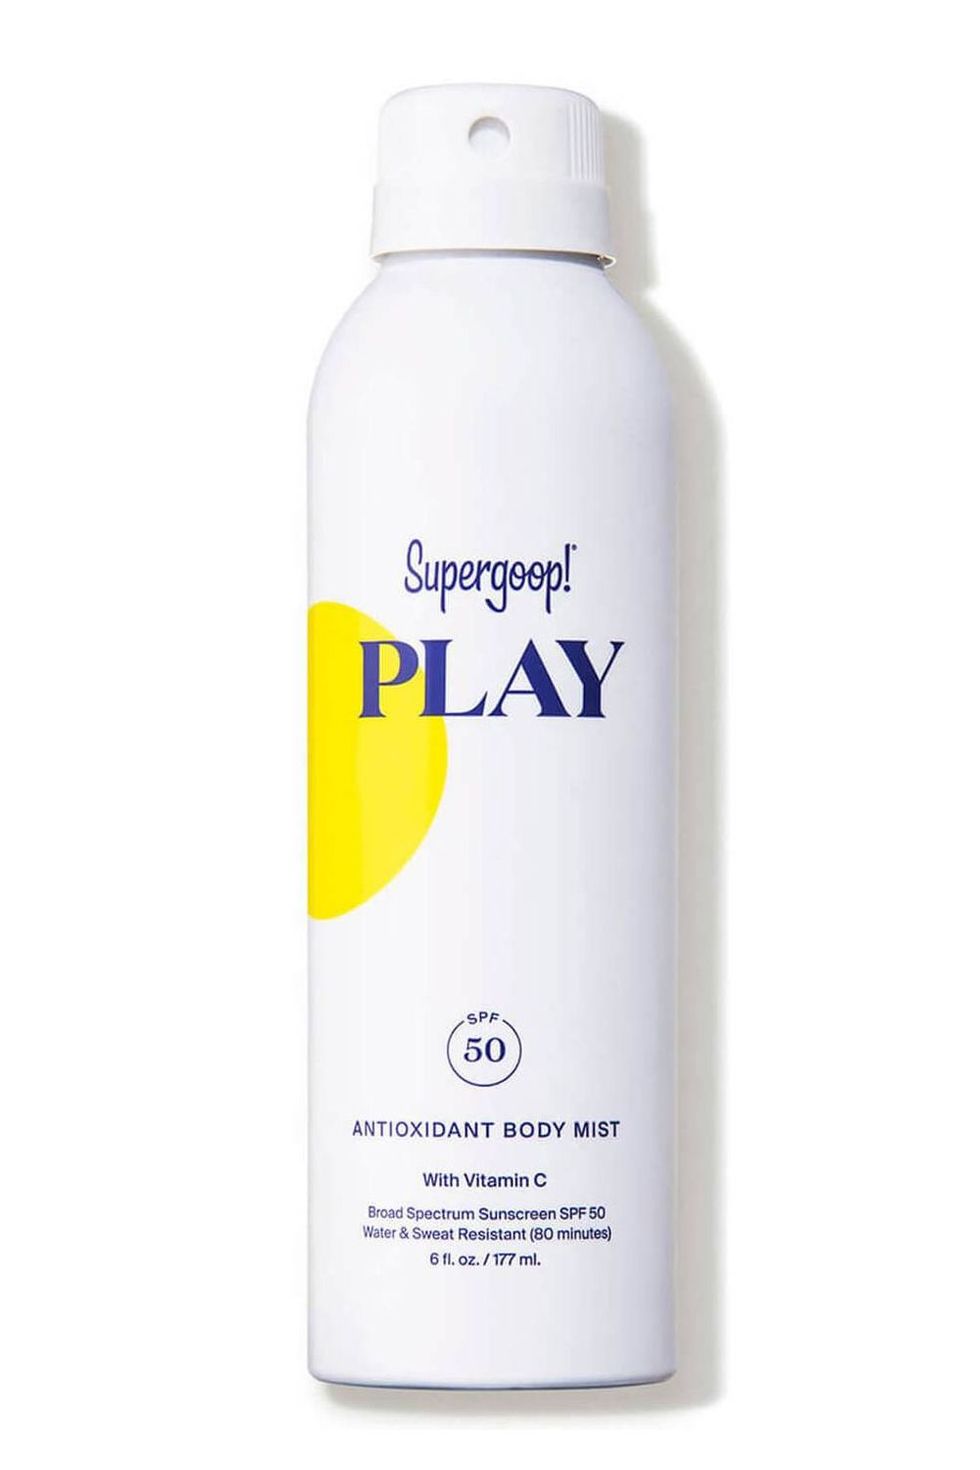 Supergoop! Play Antioxidant Body Sunscreen Mist SPF 50 PA++++